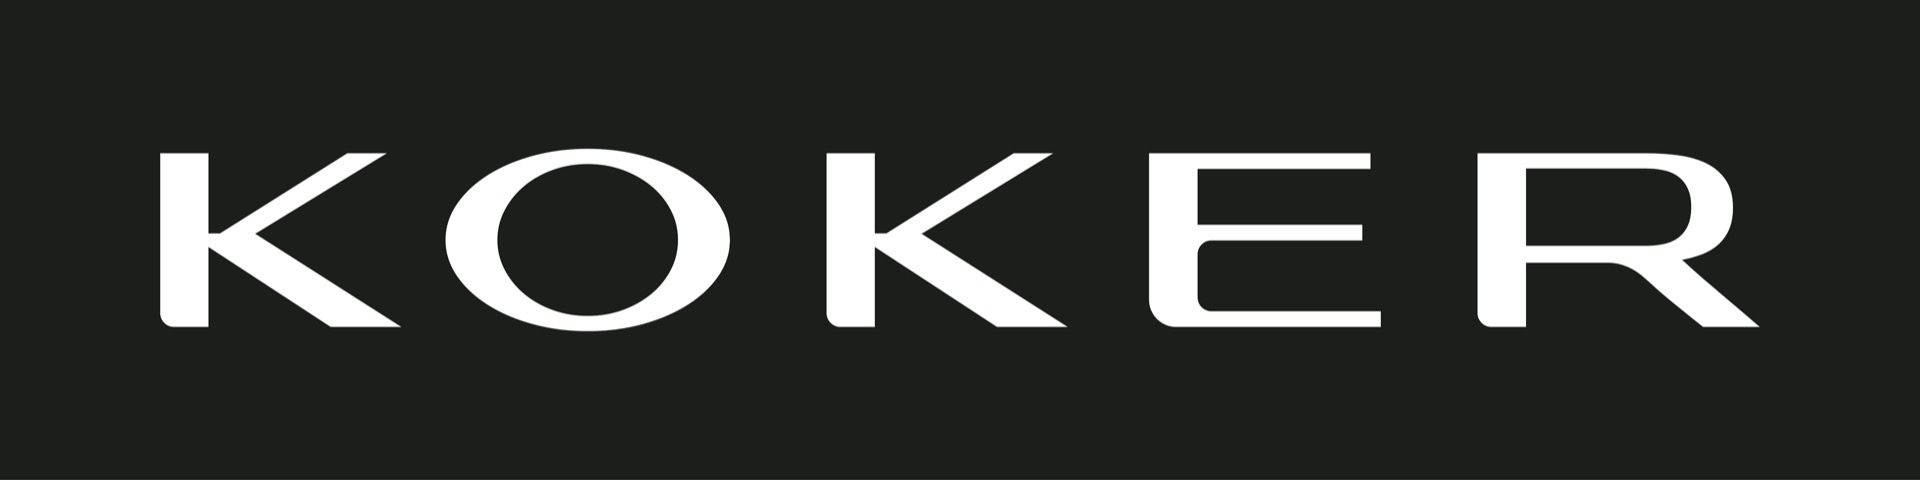 Logo_Koker2020_alta_blanco.jpg